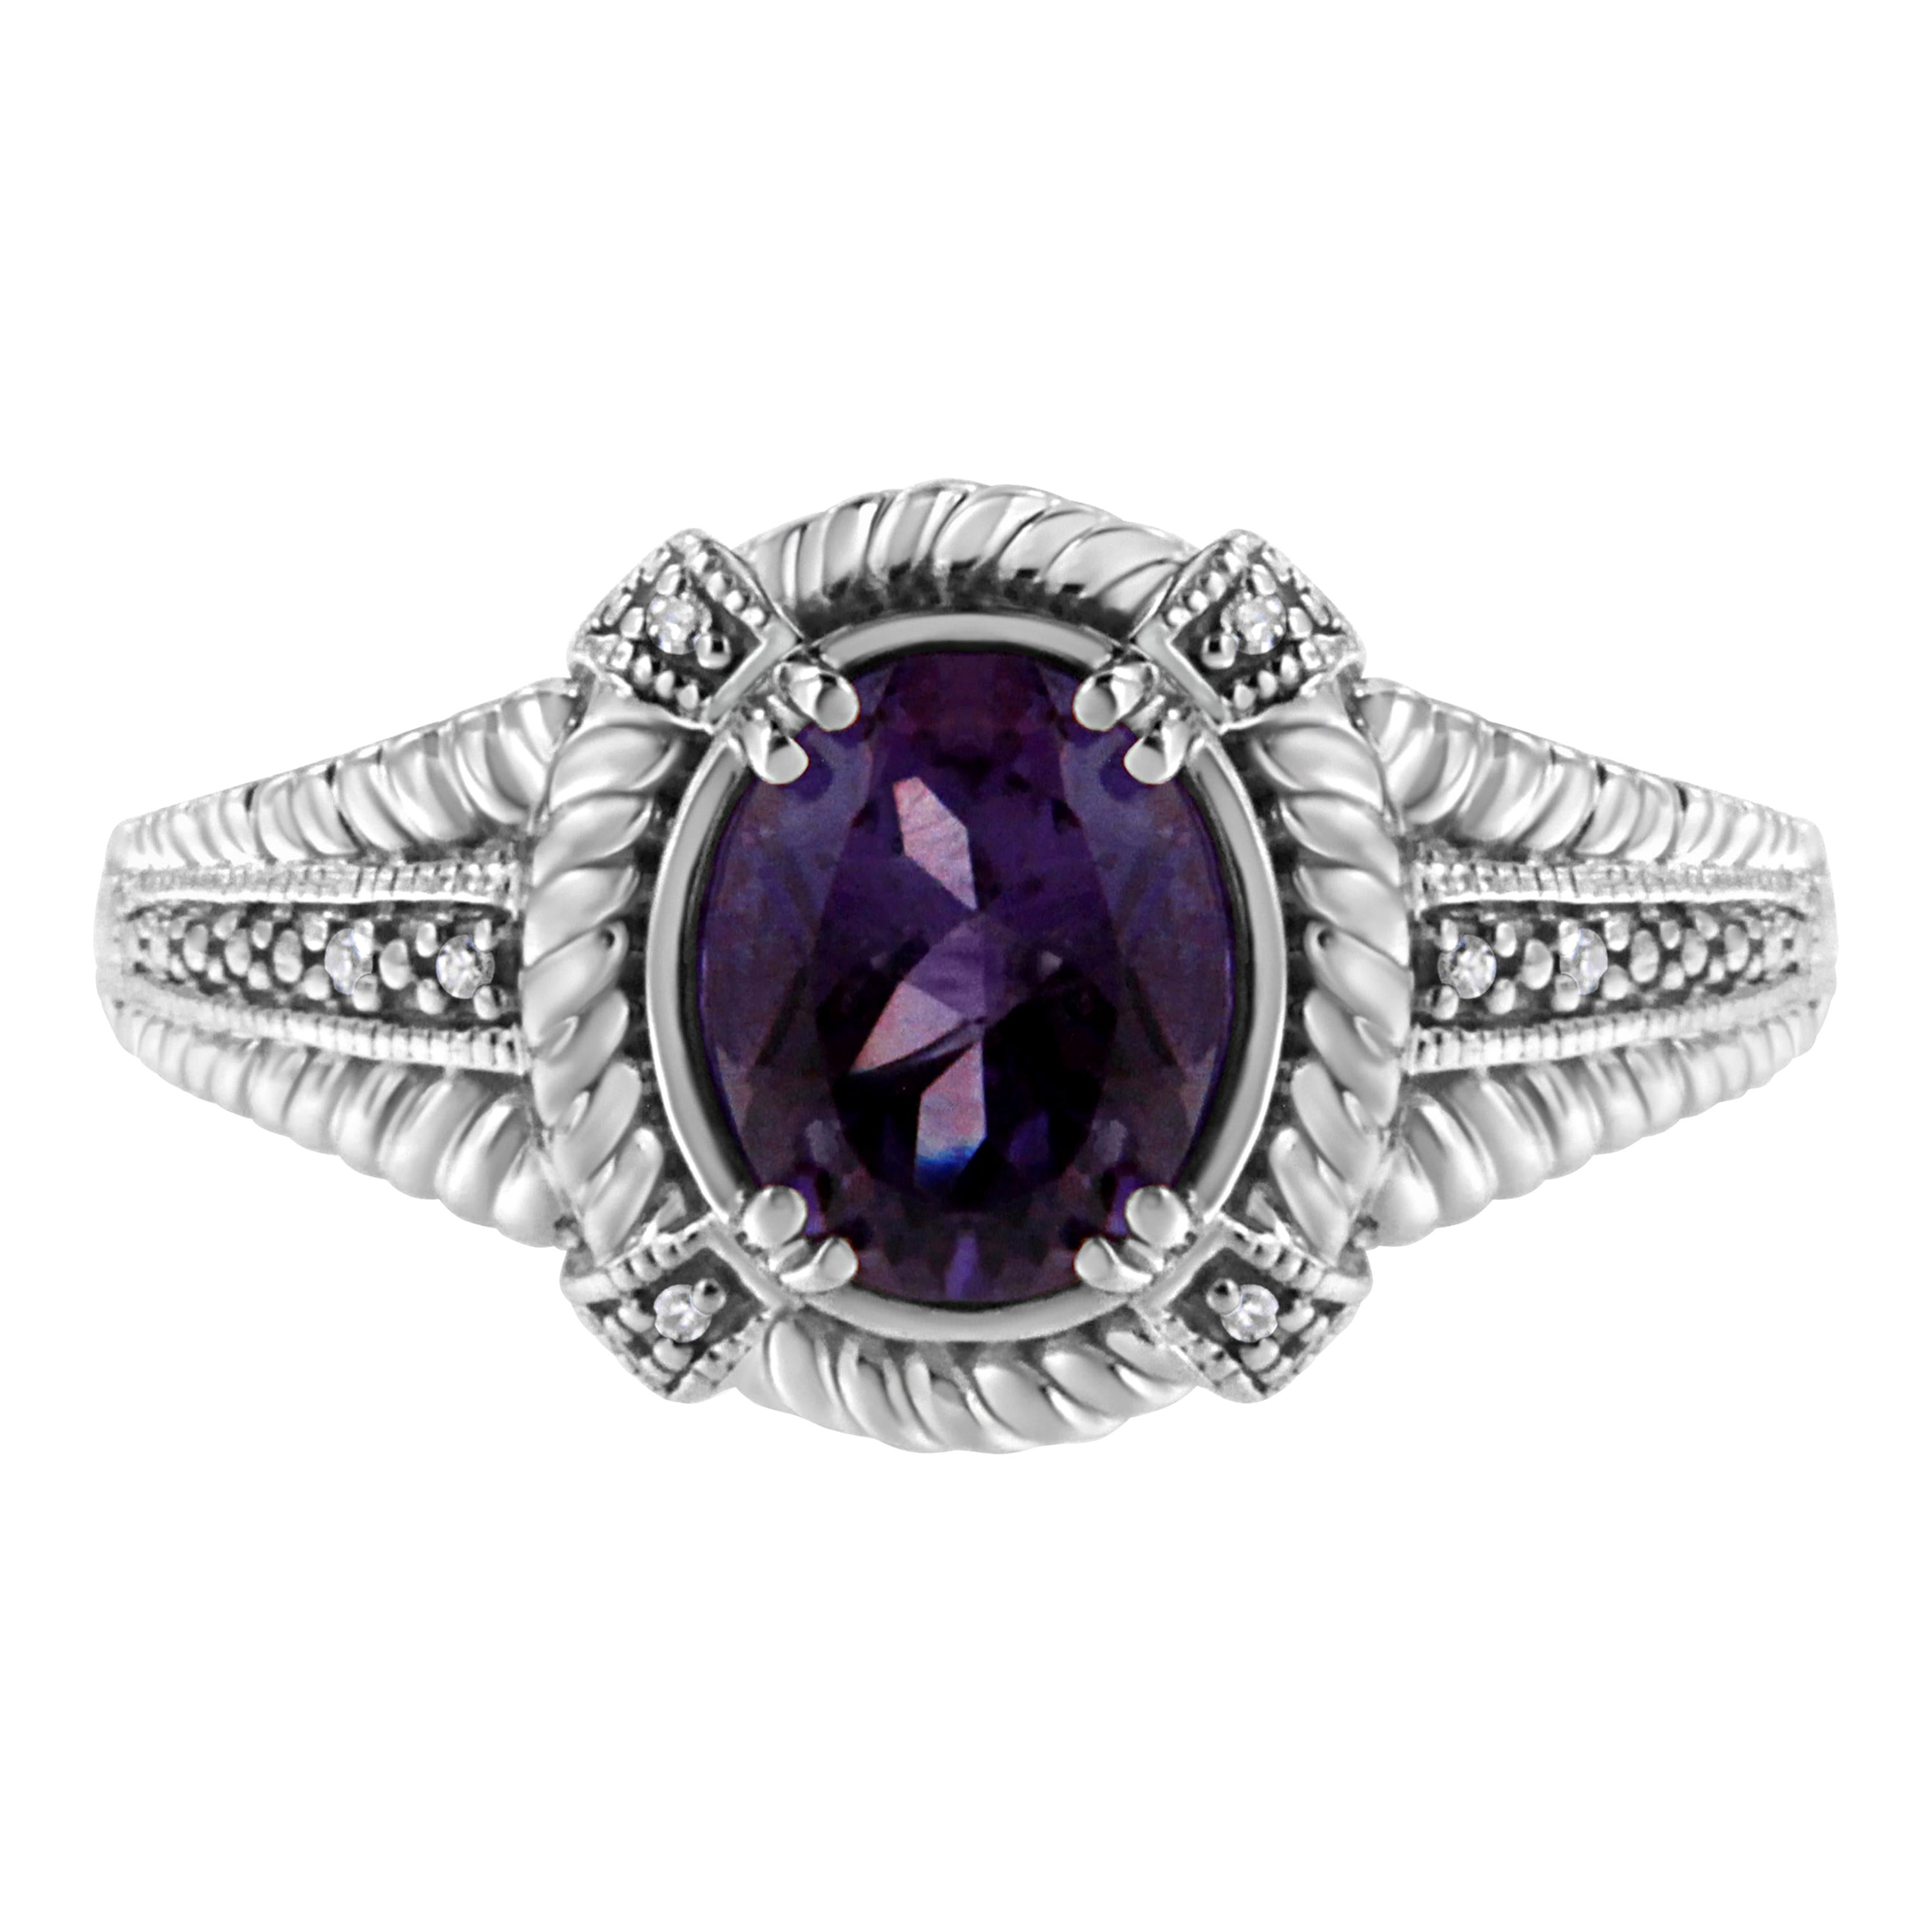 Ovaler Ring aus Sterlingsilber mit lila Amethyst Solitär und Diamant-Akzent